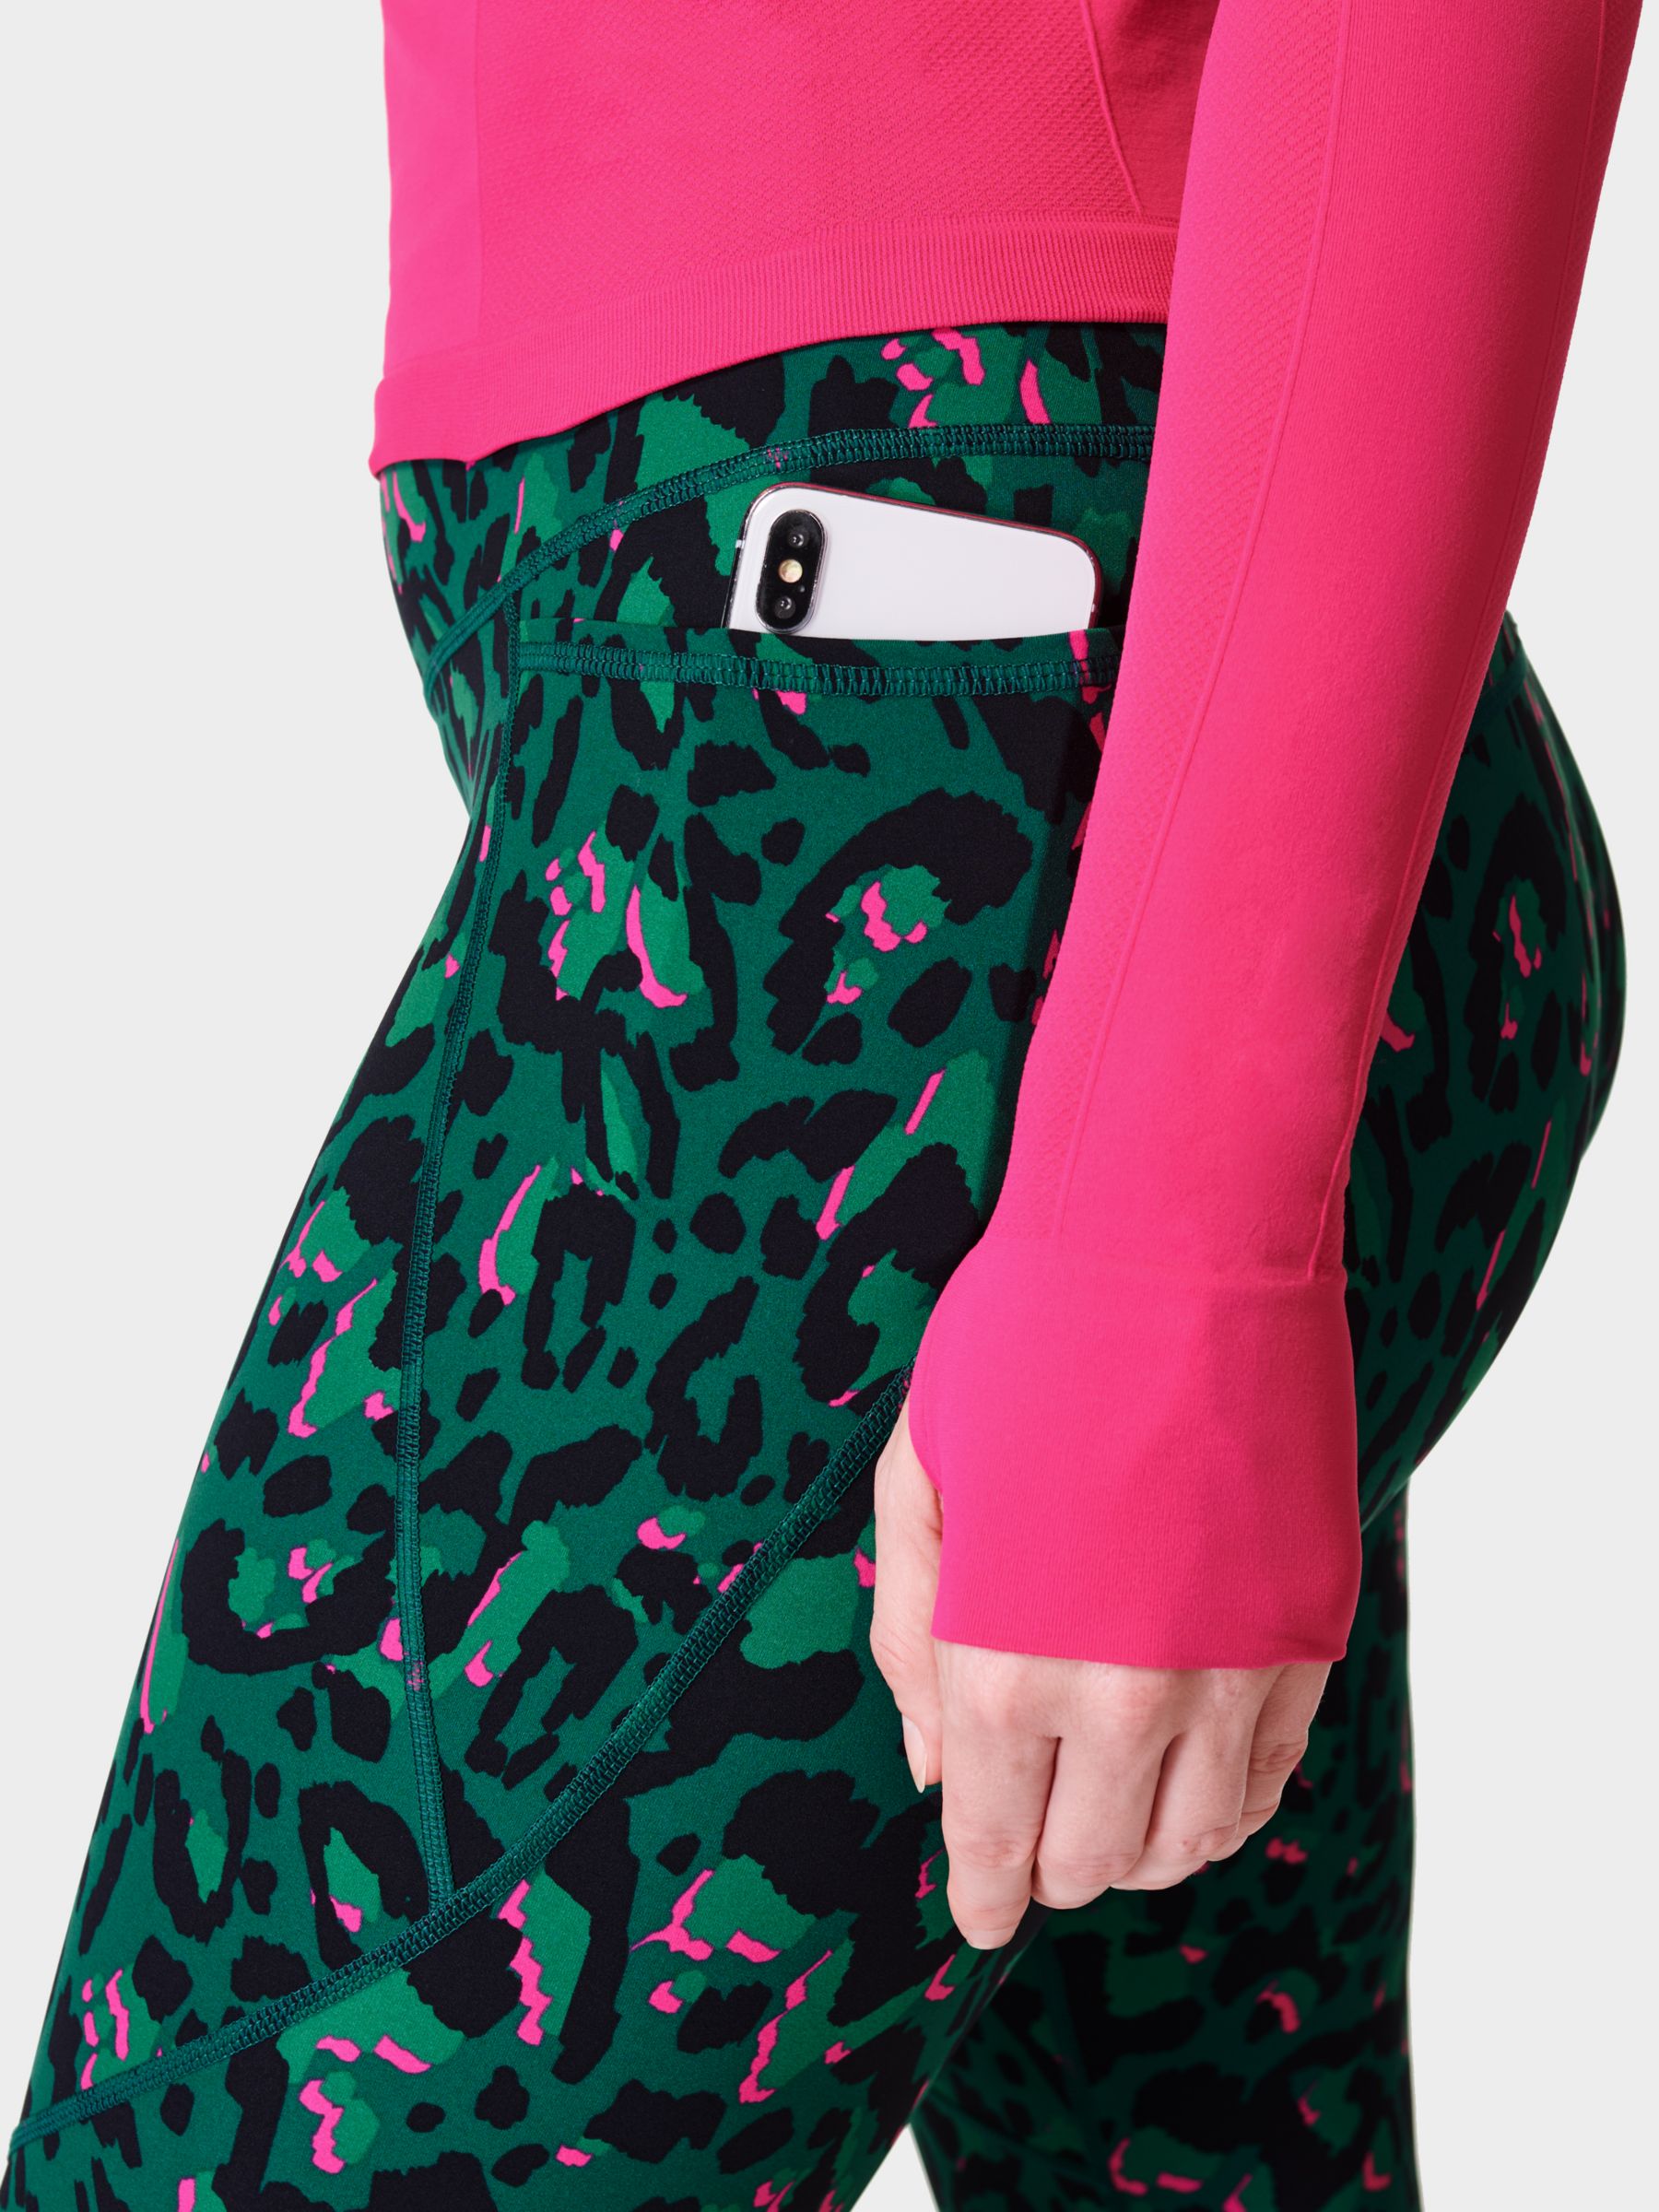 Sweaty Betty Power Gym Leggings, Green Brushed Leopard Print, XXS